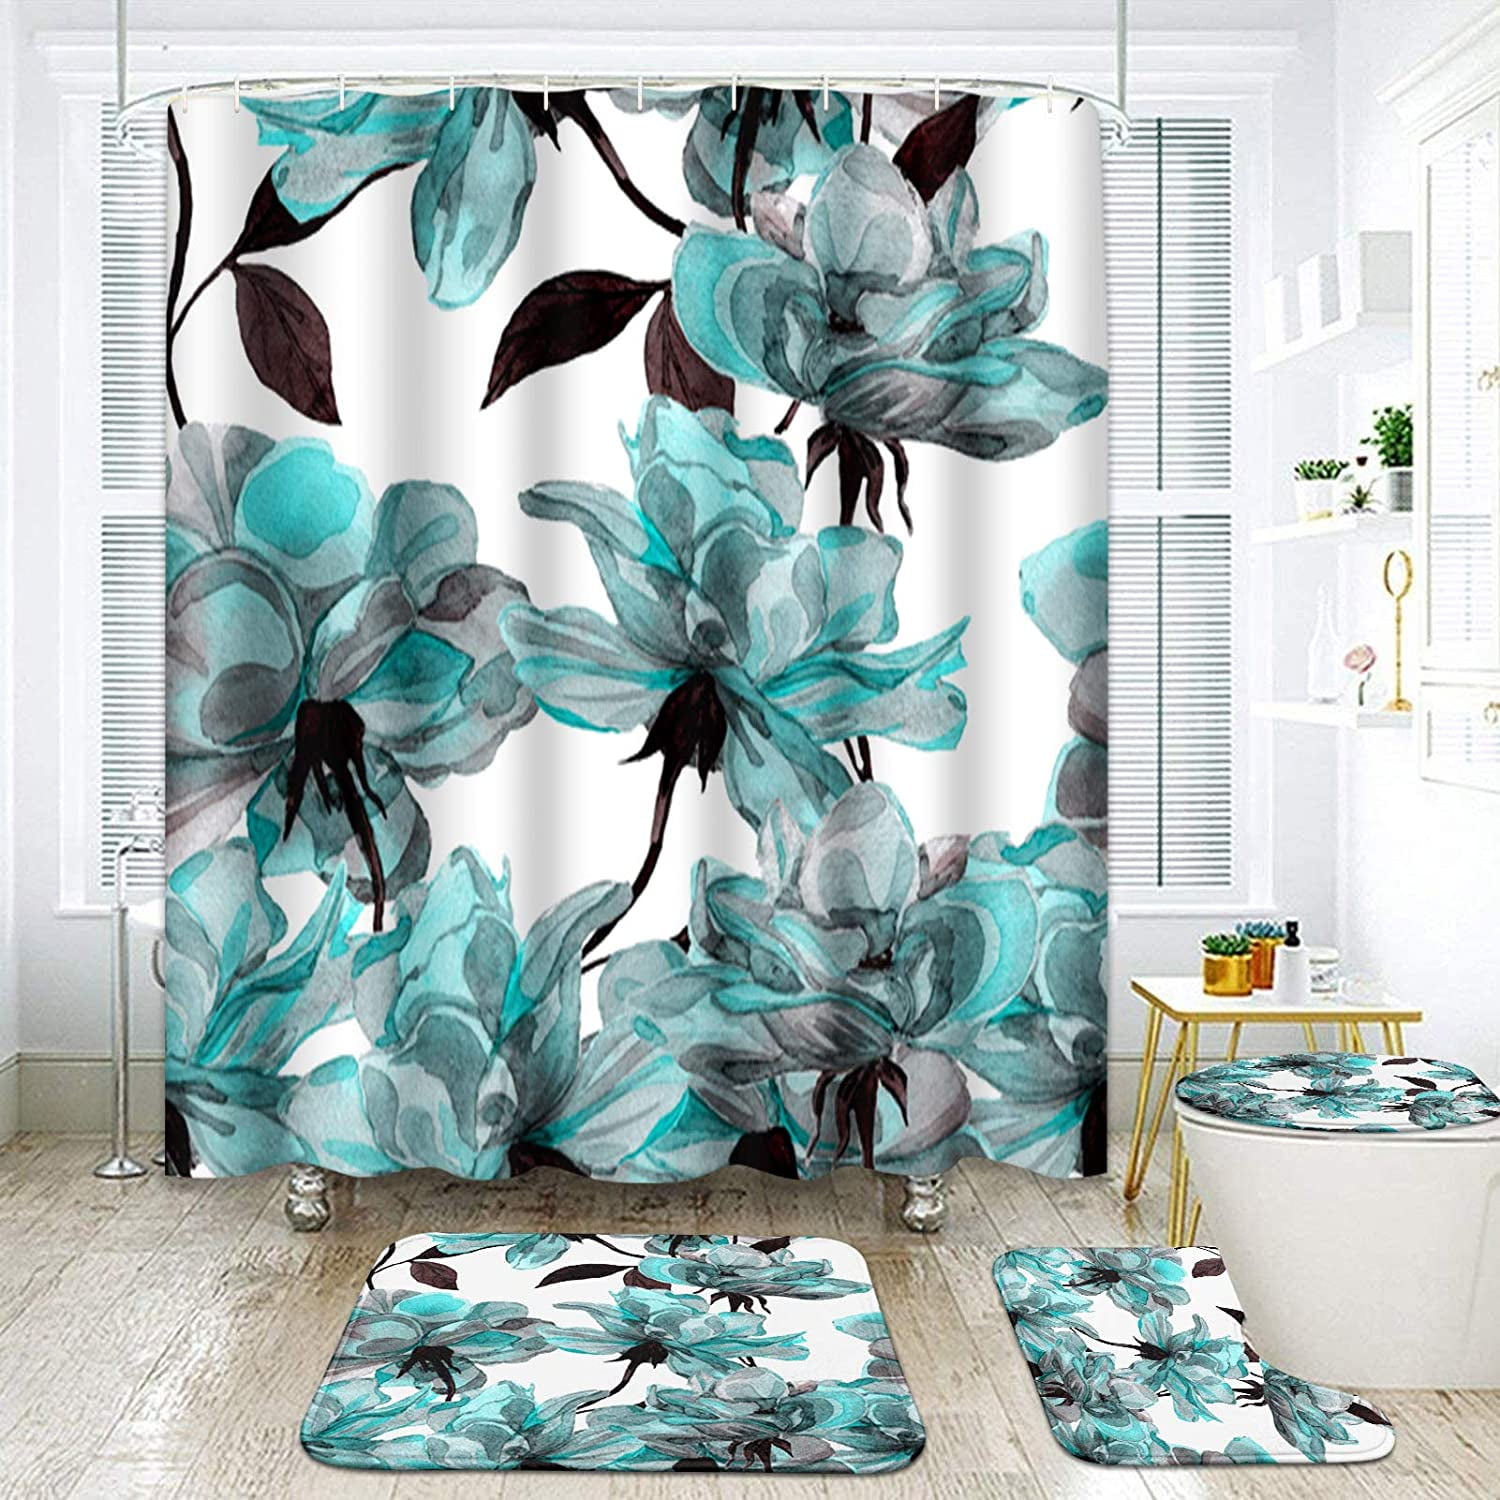 Details about   4Pcs/Set Waterproof Natural Shower Curtain Bathroom Carpet Rug Toilet Cover Mat 